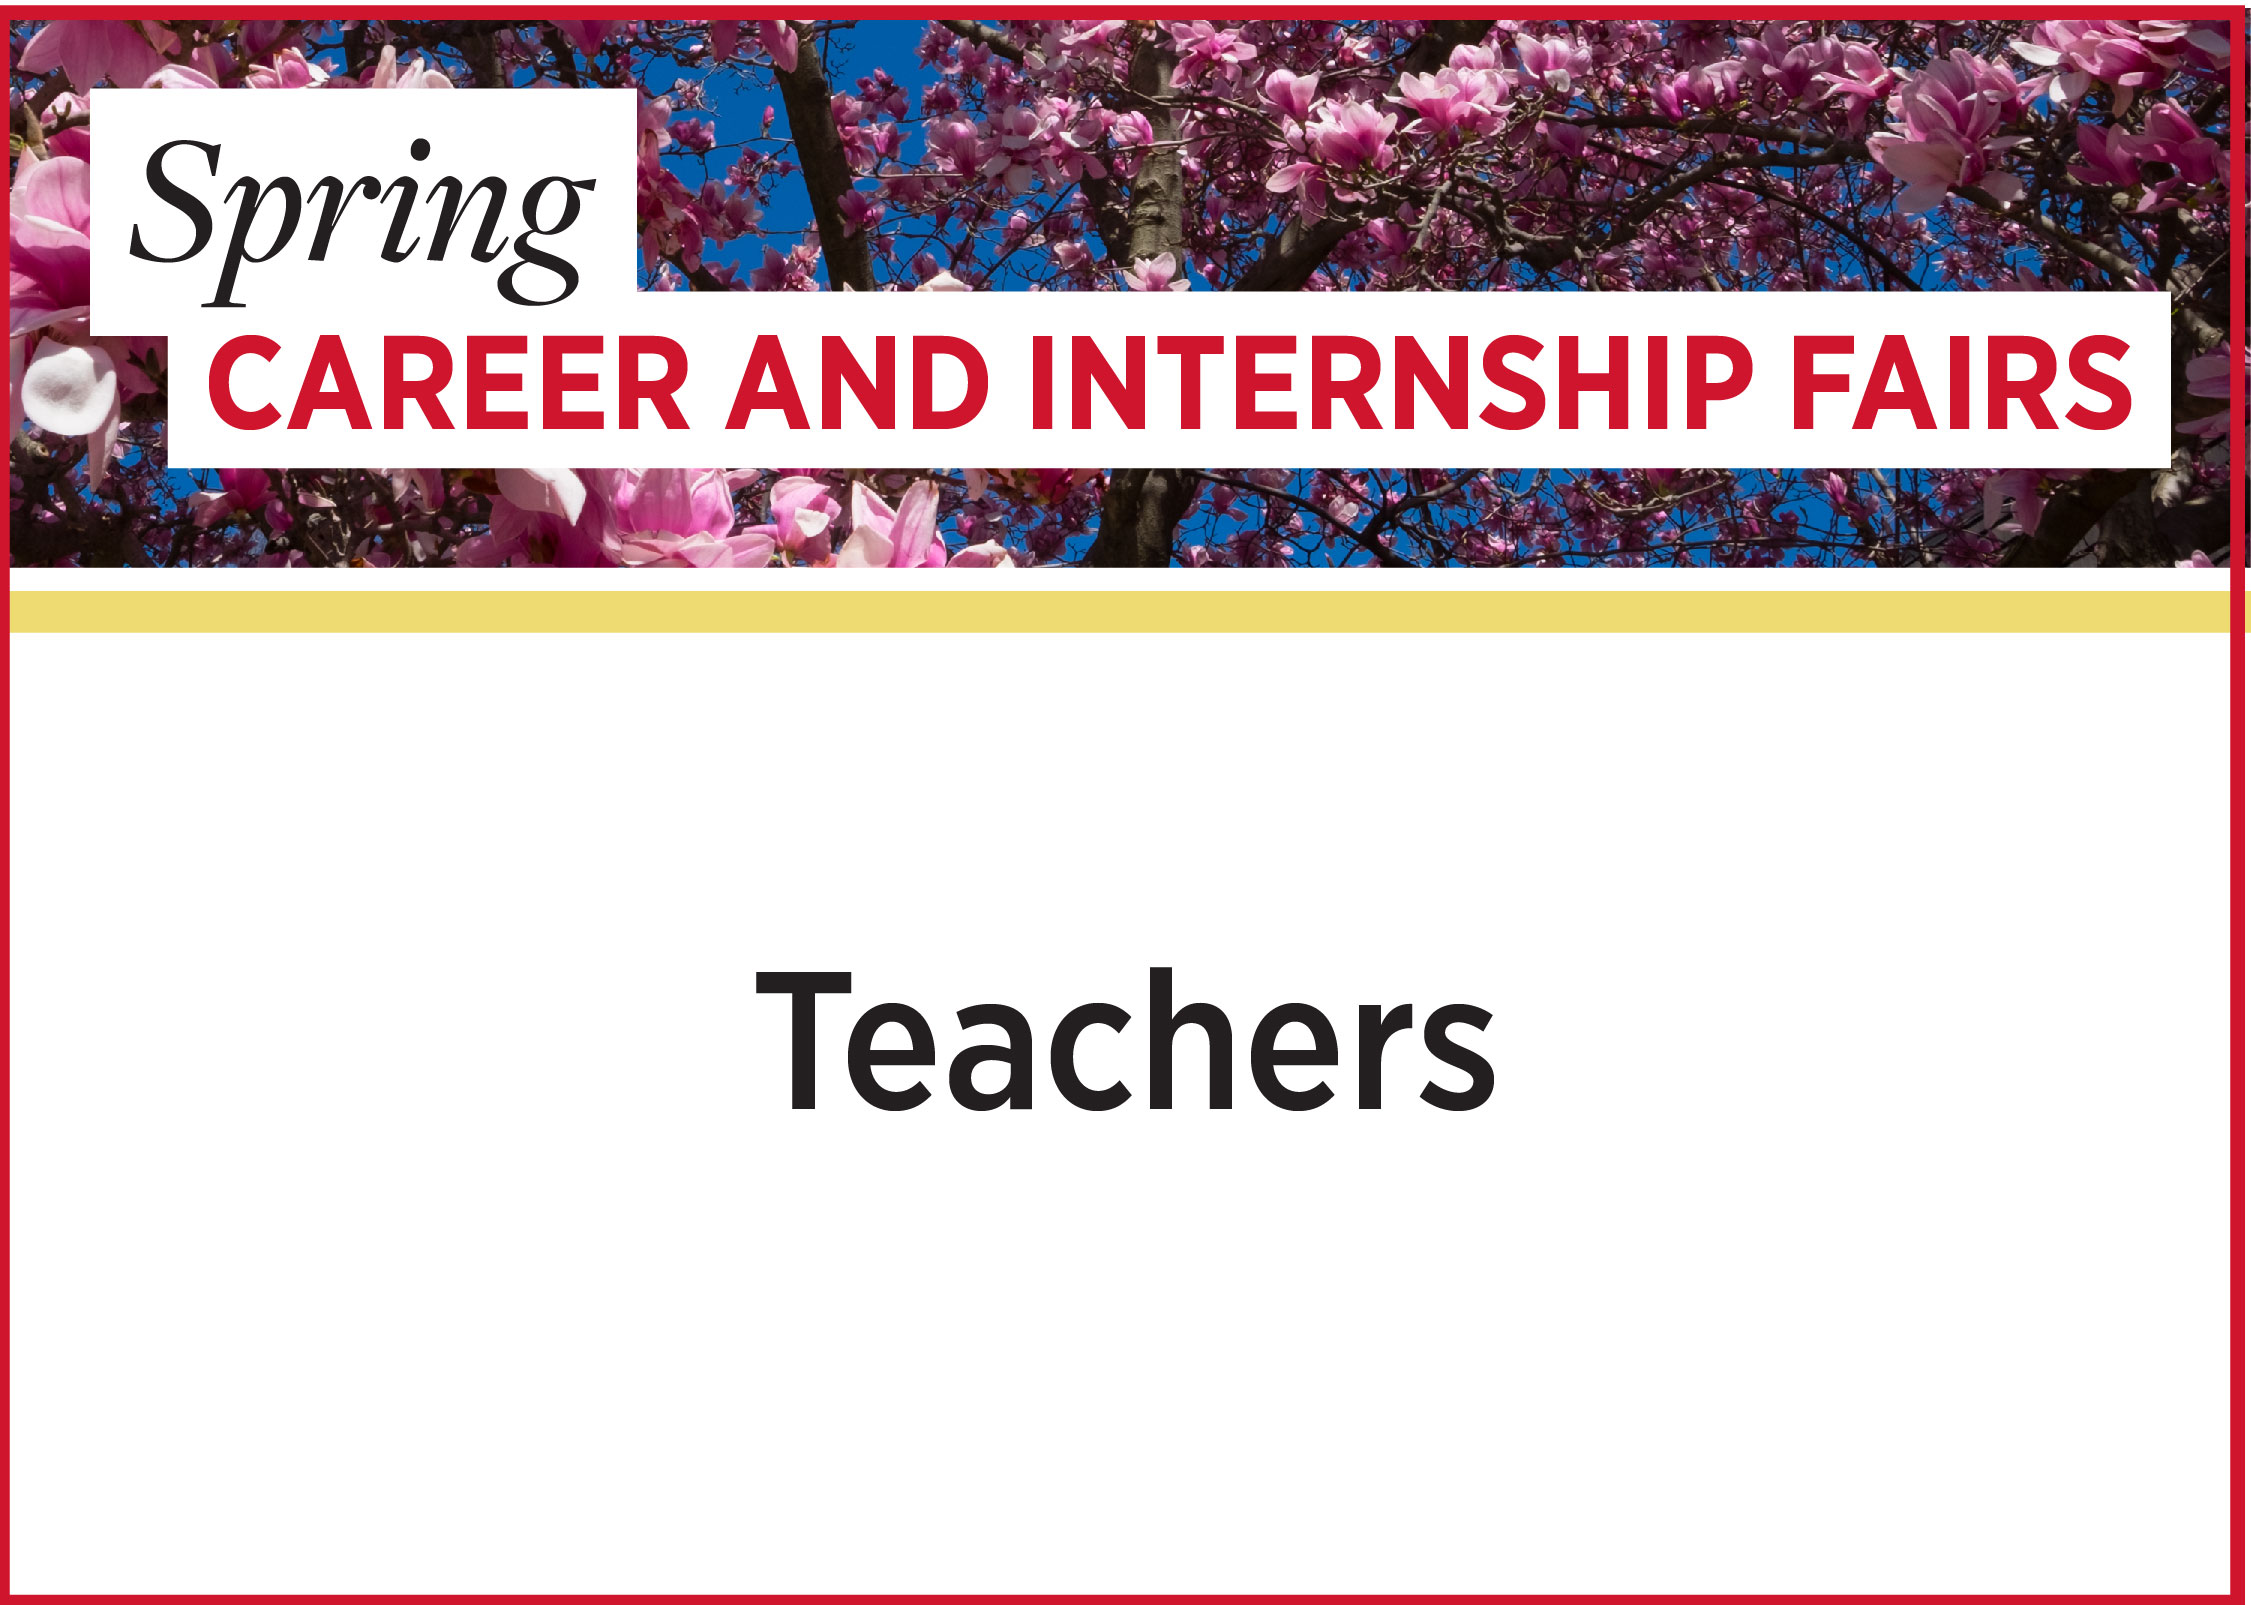 Spring Career and Internship Fairs - Teachers